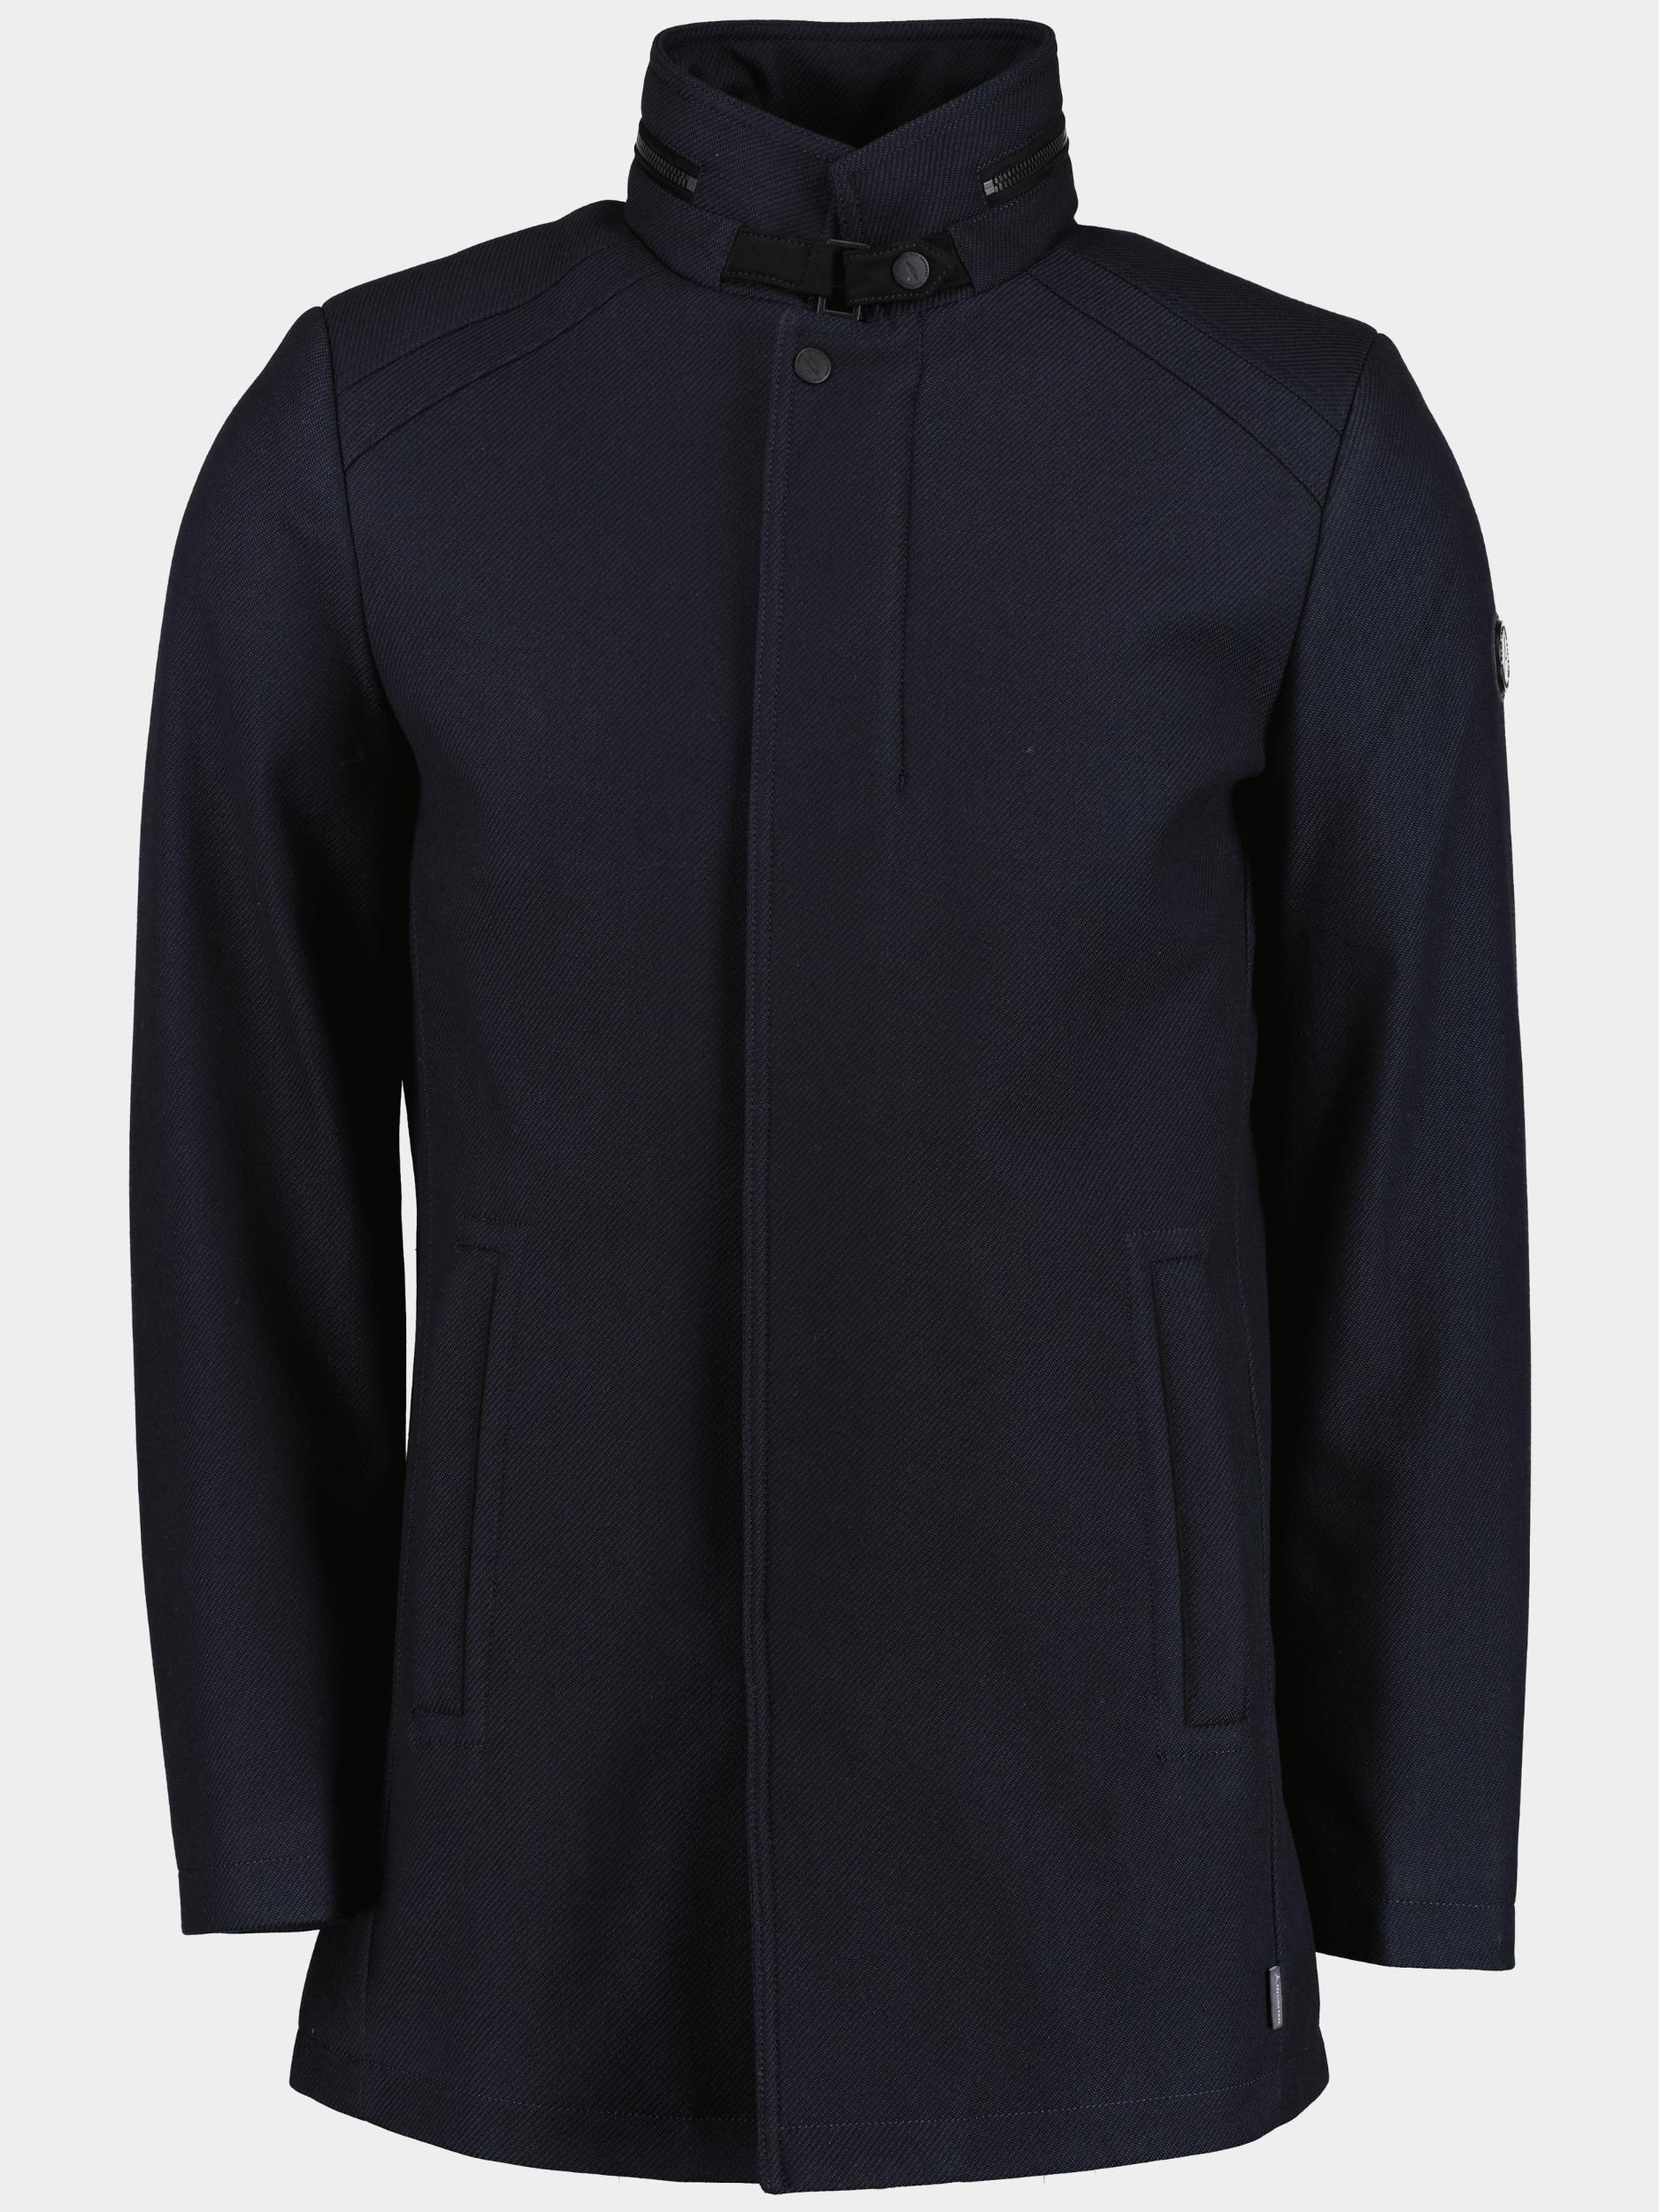 Donders 1860 Winterjack Blauw Textile jacket 21691/780